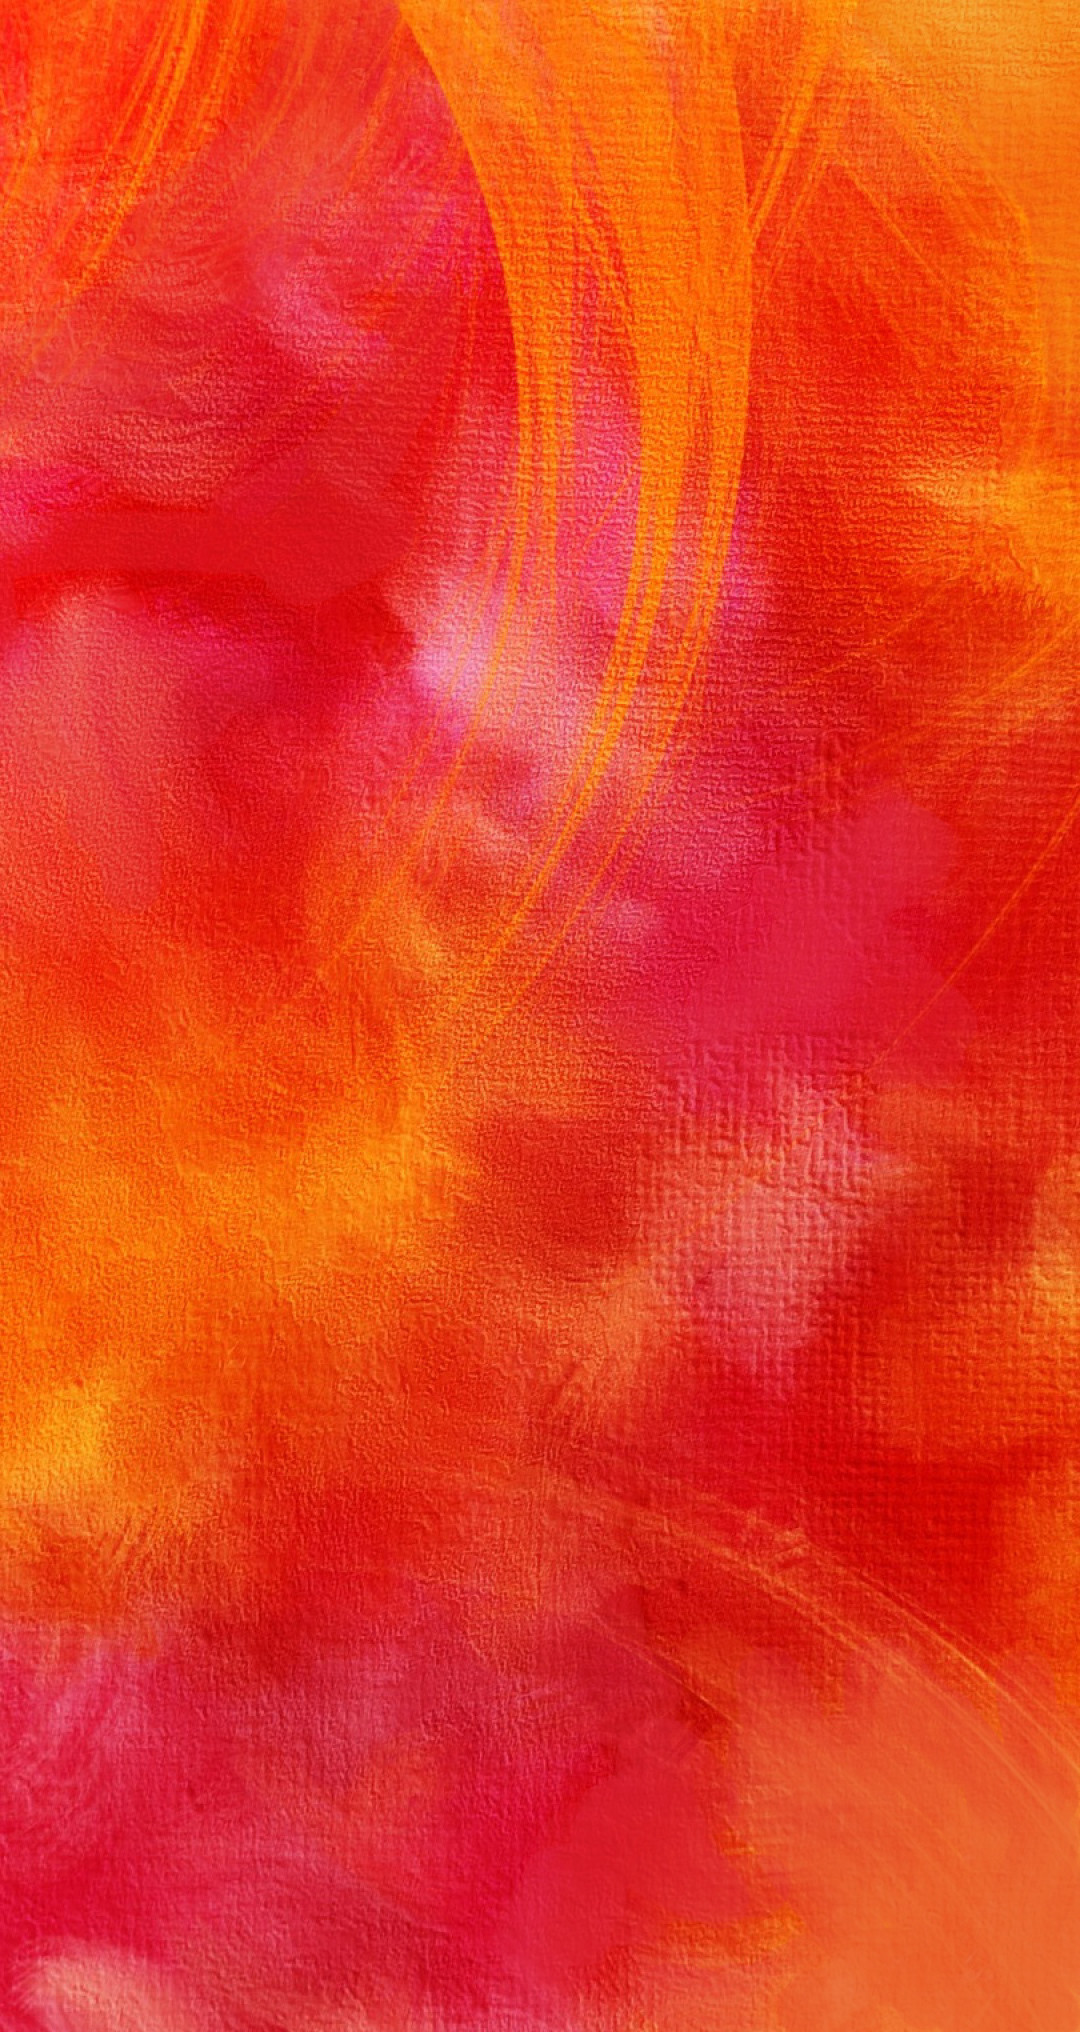 1080x2032 Splash of Orange and Pink